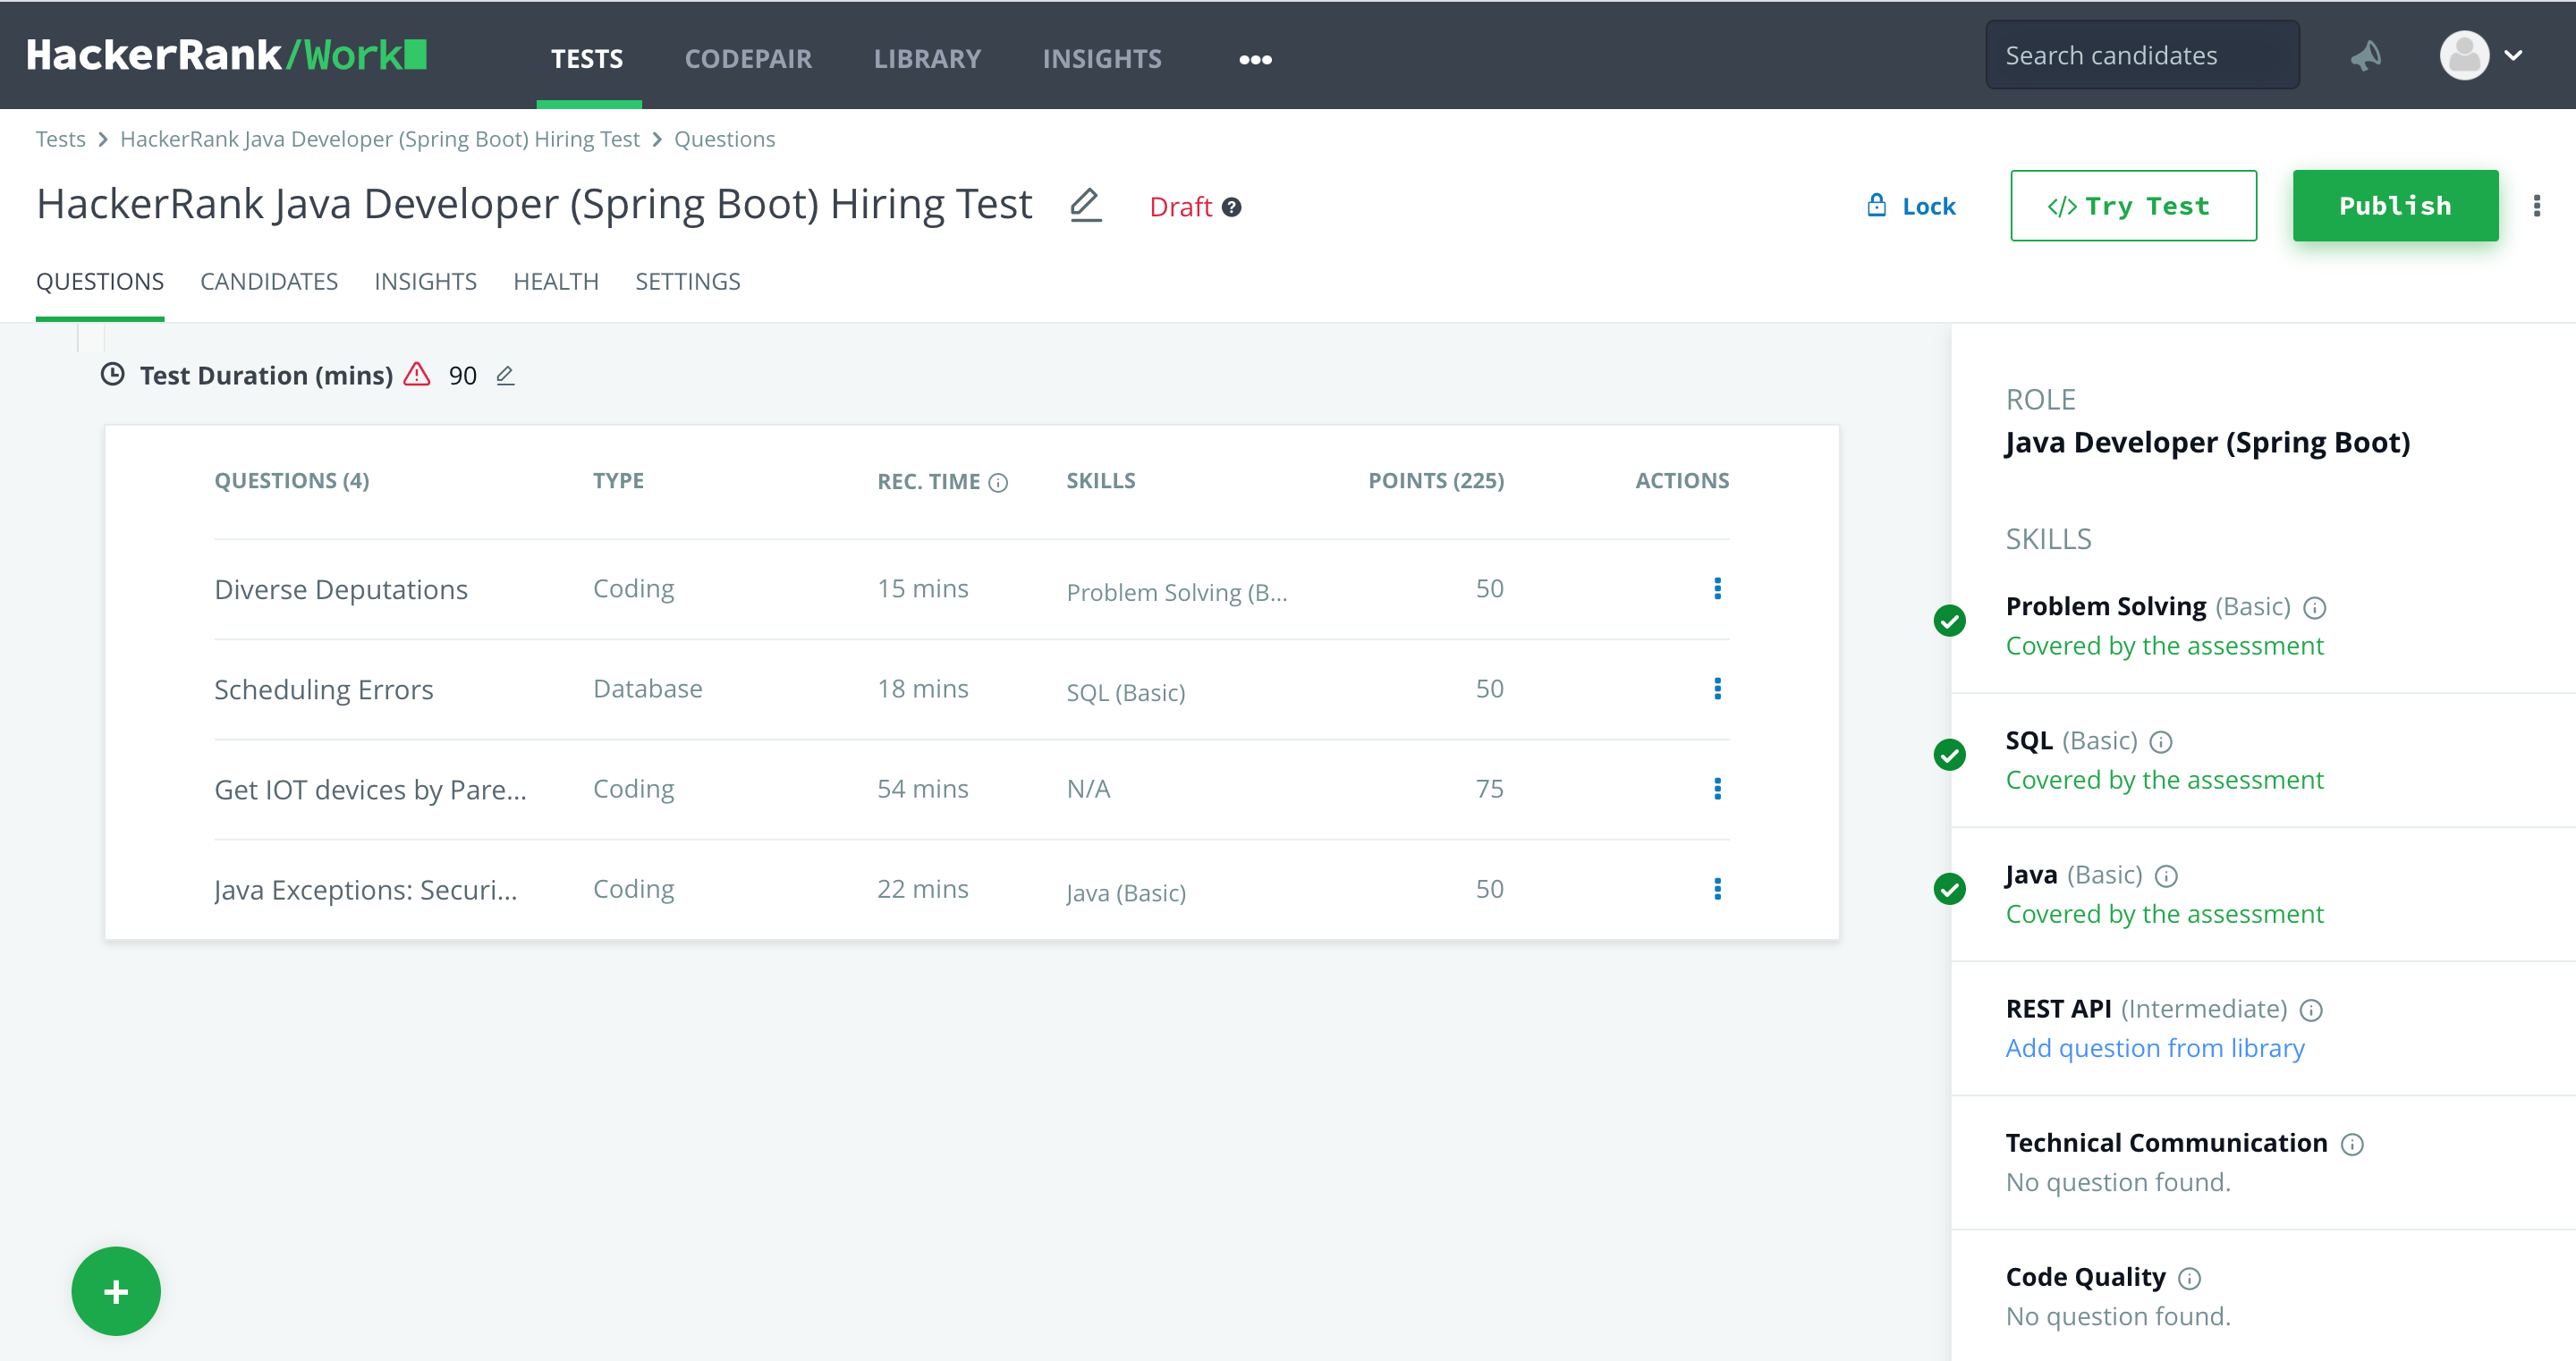 Screenshot of the HackerRank platform showing the new skills-based test creation capabilities